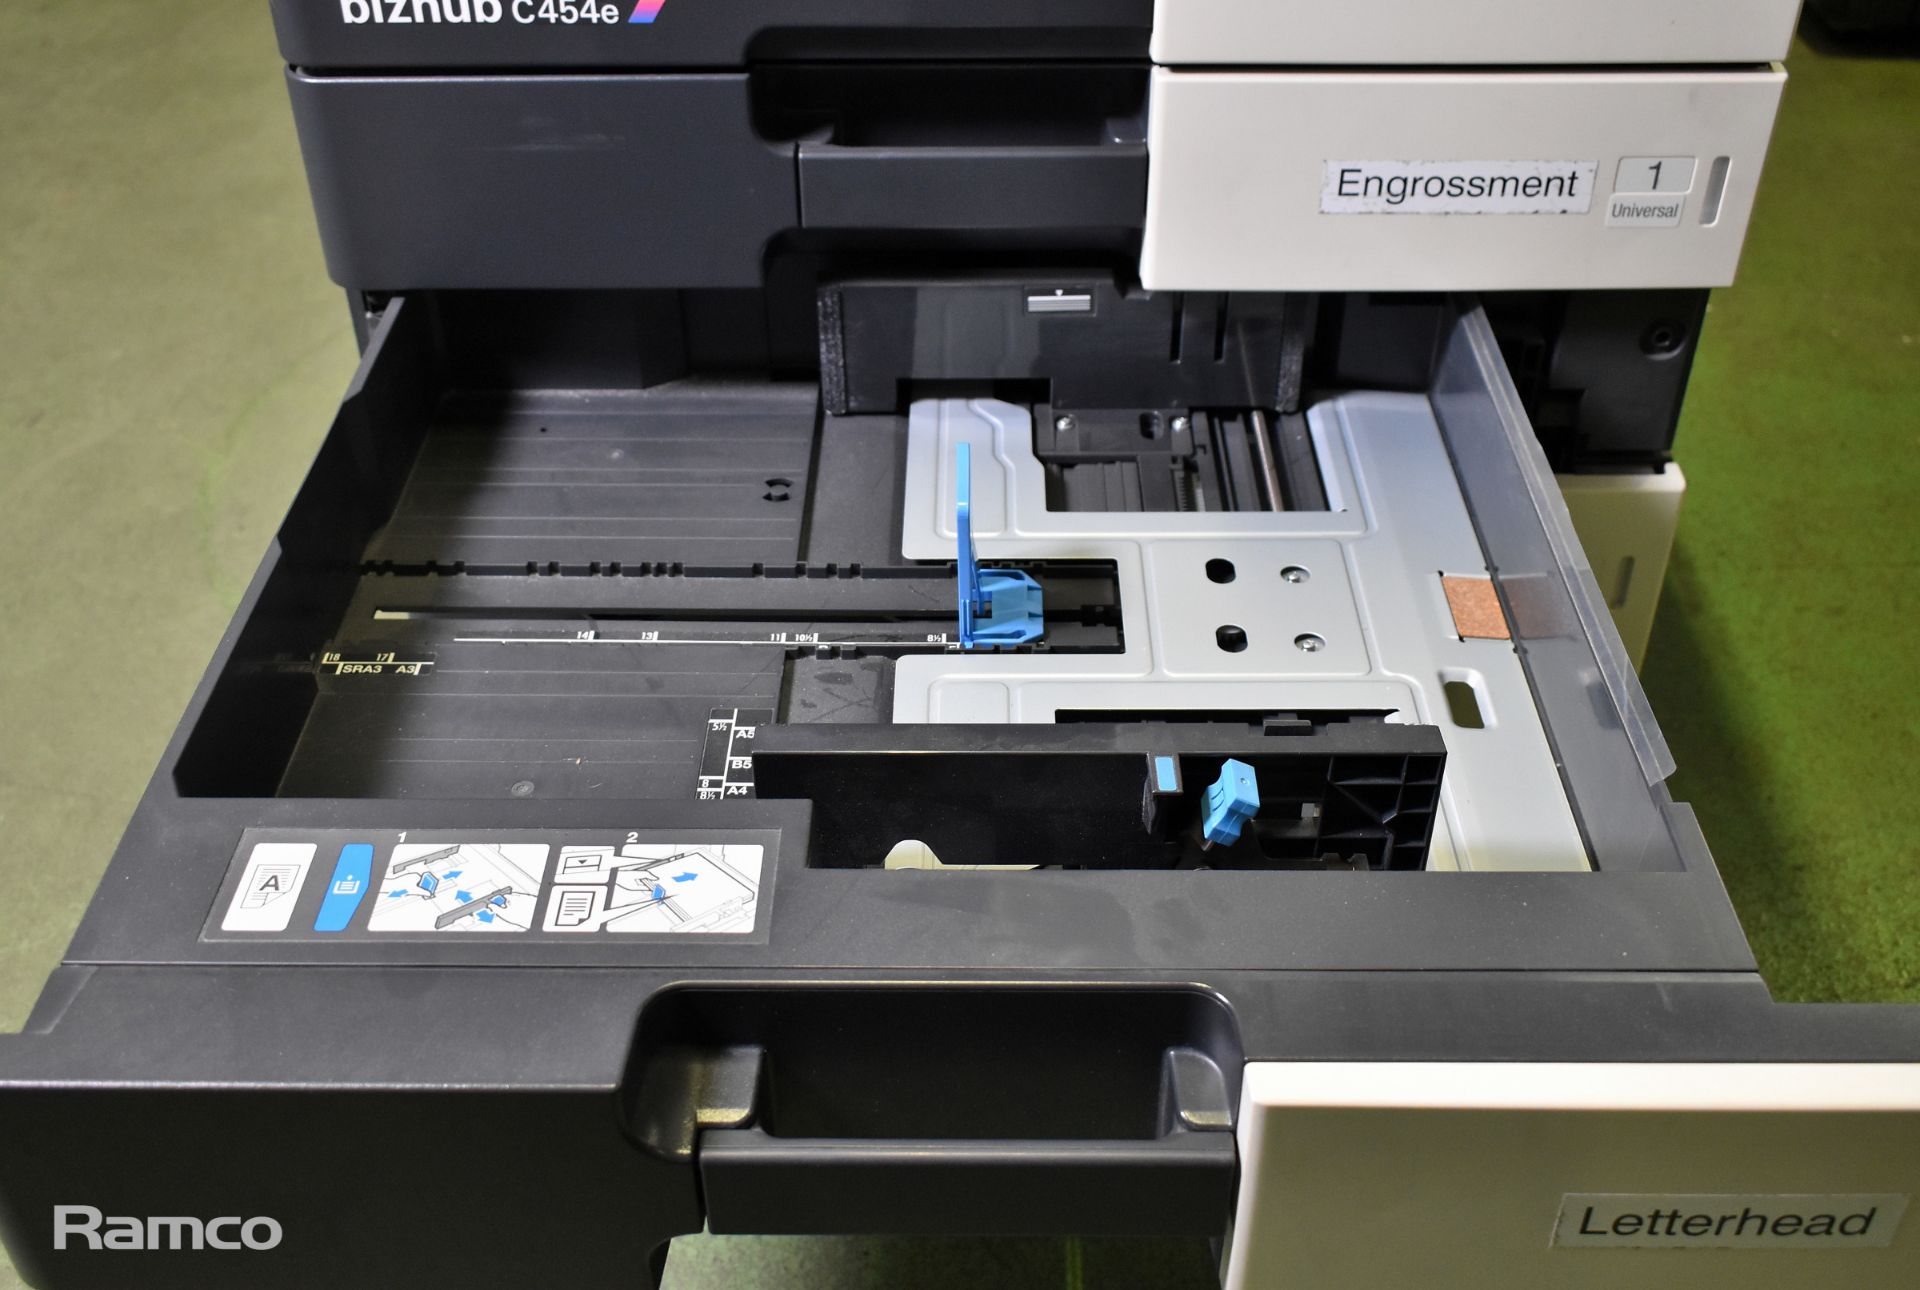 Konica Minolta Bizhub C454e A3 multifunction laser printer - H 92 x W 70 x D 62cm - Bild 3 aus 18